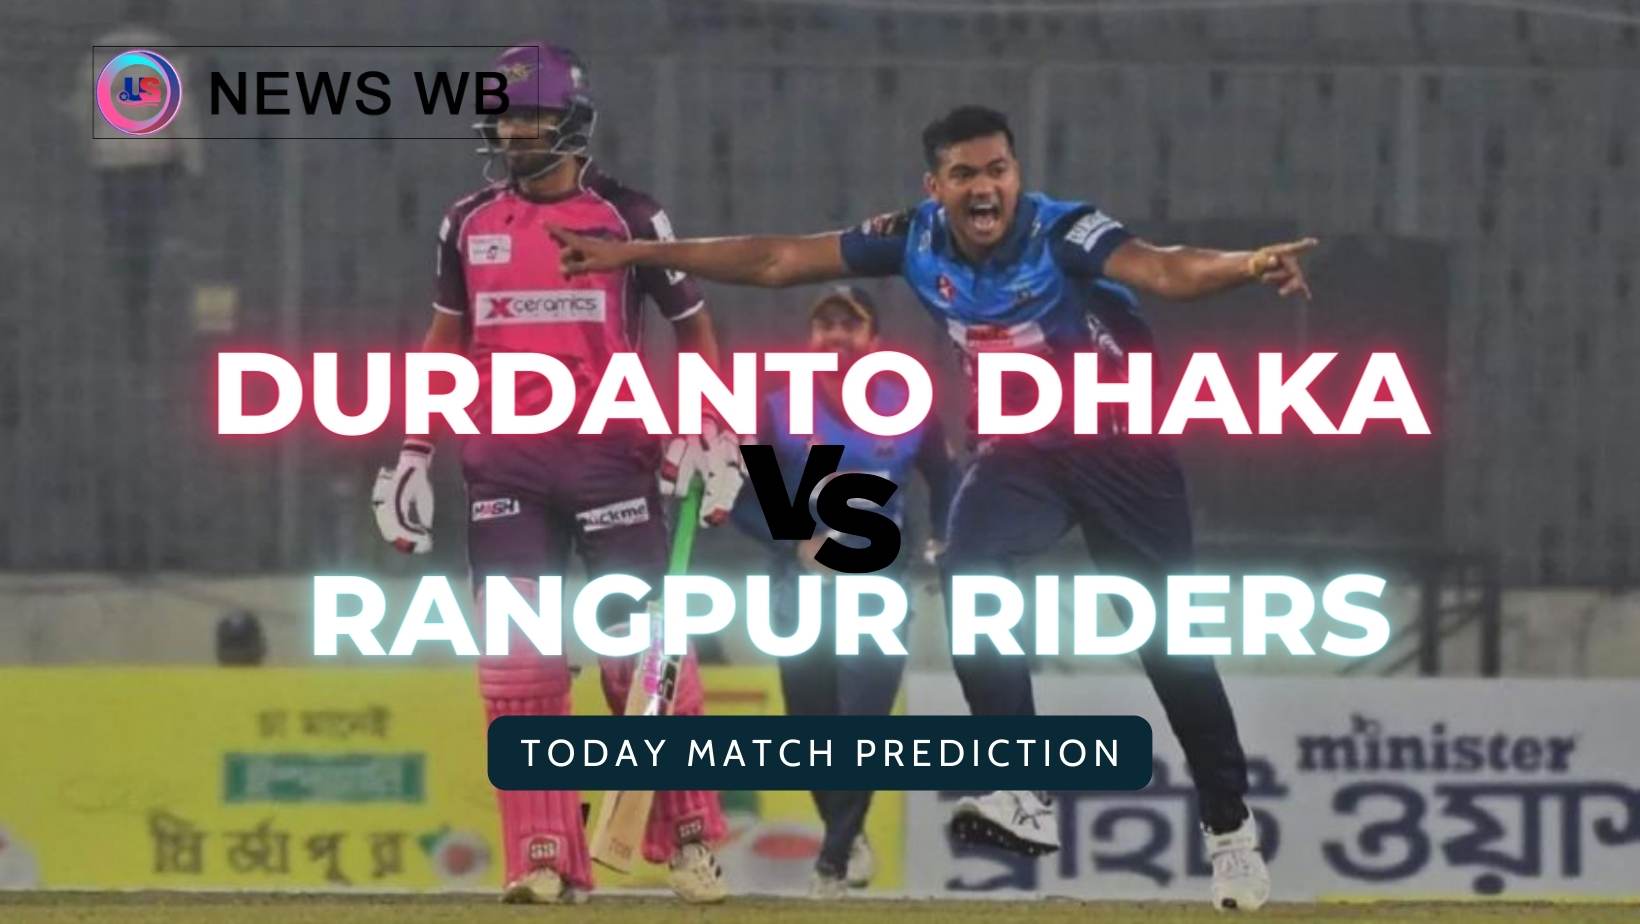 Today Match Prediction: DRD vs RGR Dream11 Team, Durdanto Dhaka vs Rangpur Riders 12th Match, Who Will Win?